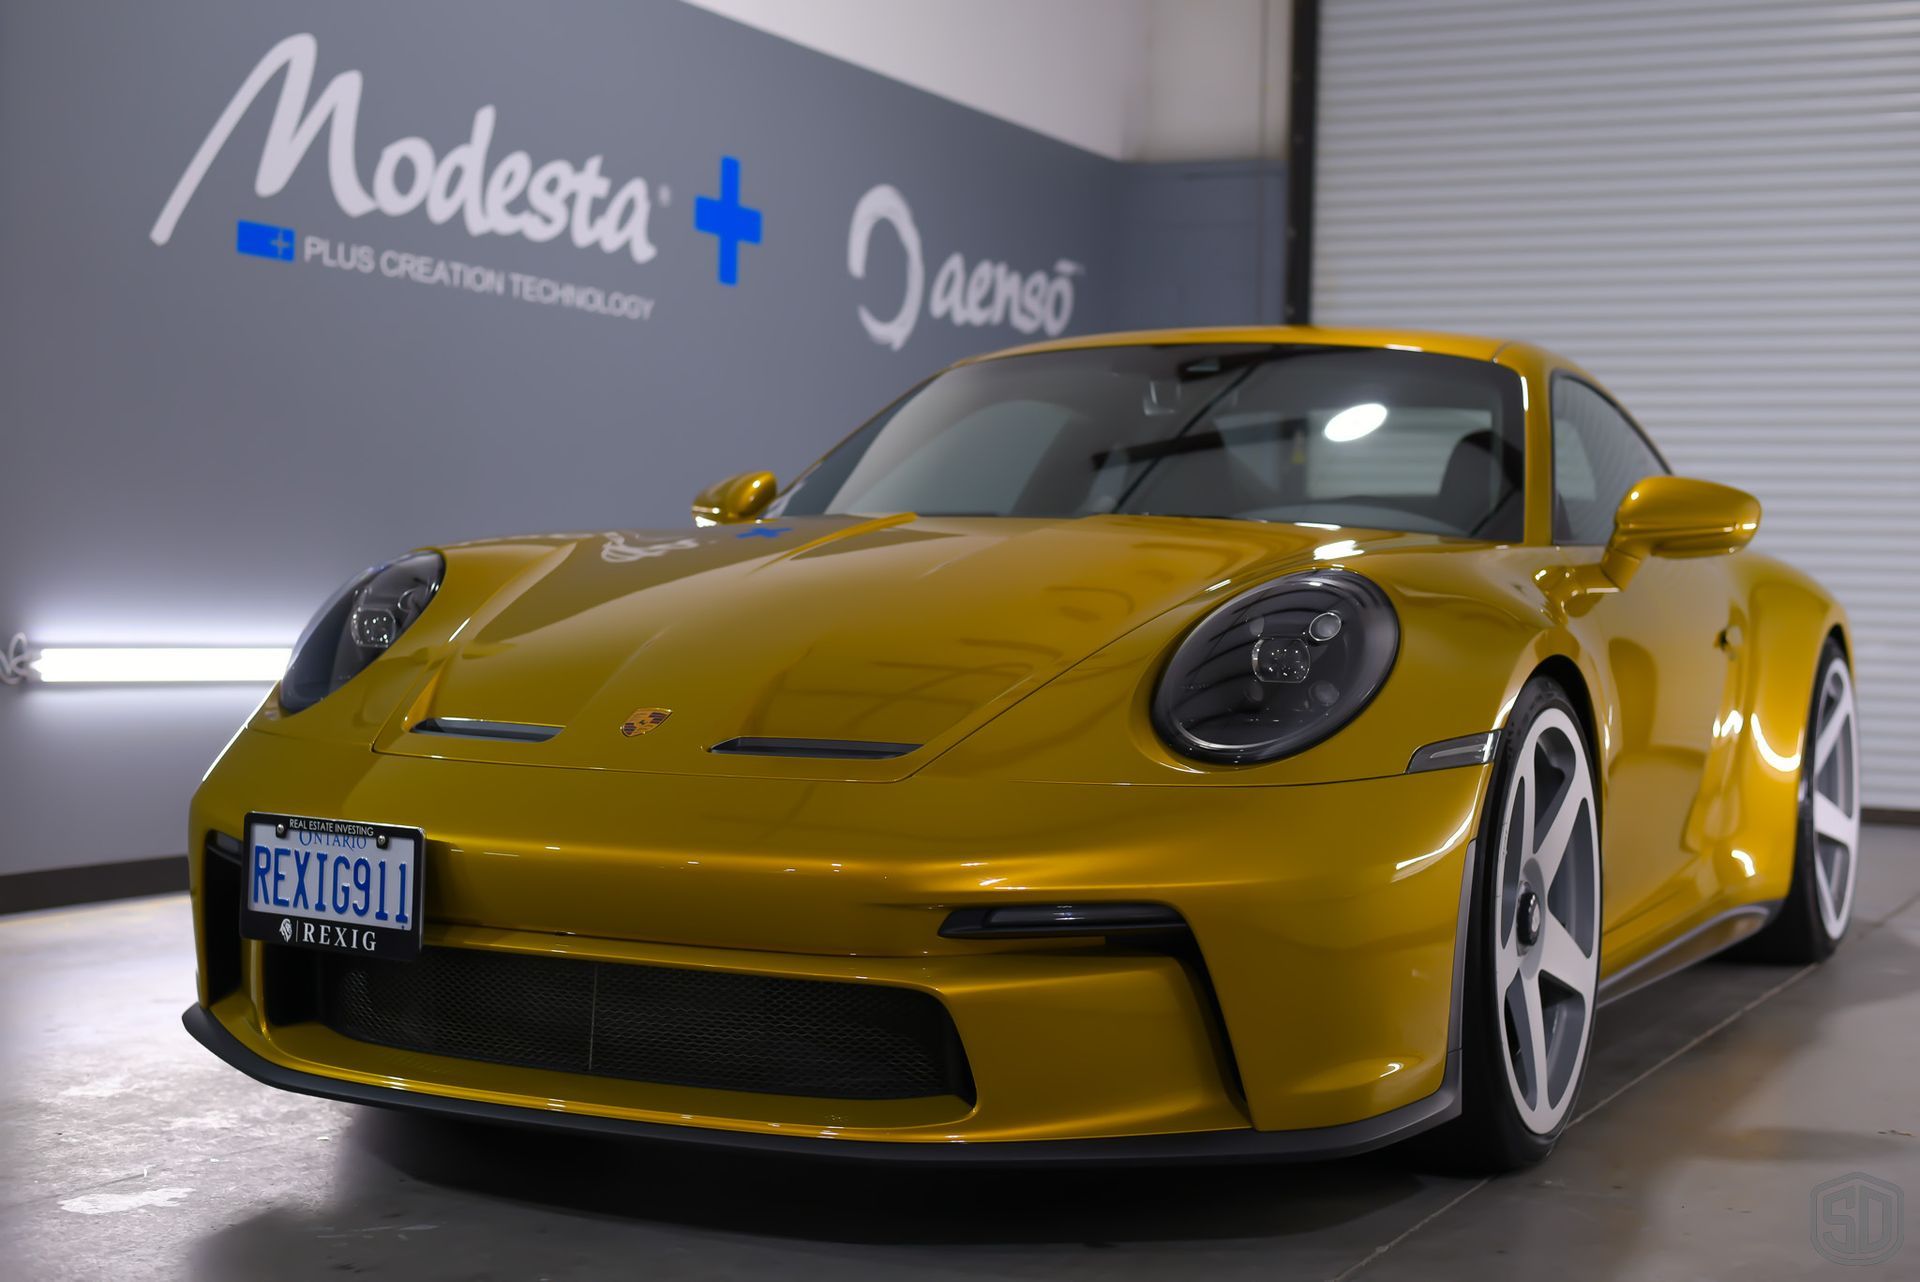 Porsche 911 GT3 Touring Detailing with Aenso Car Care Products Orlando, Florida USA